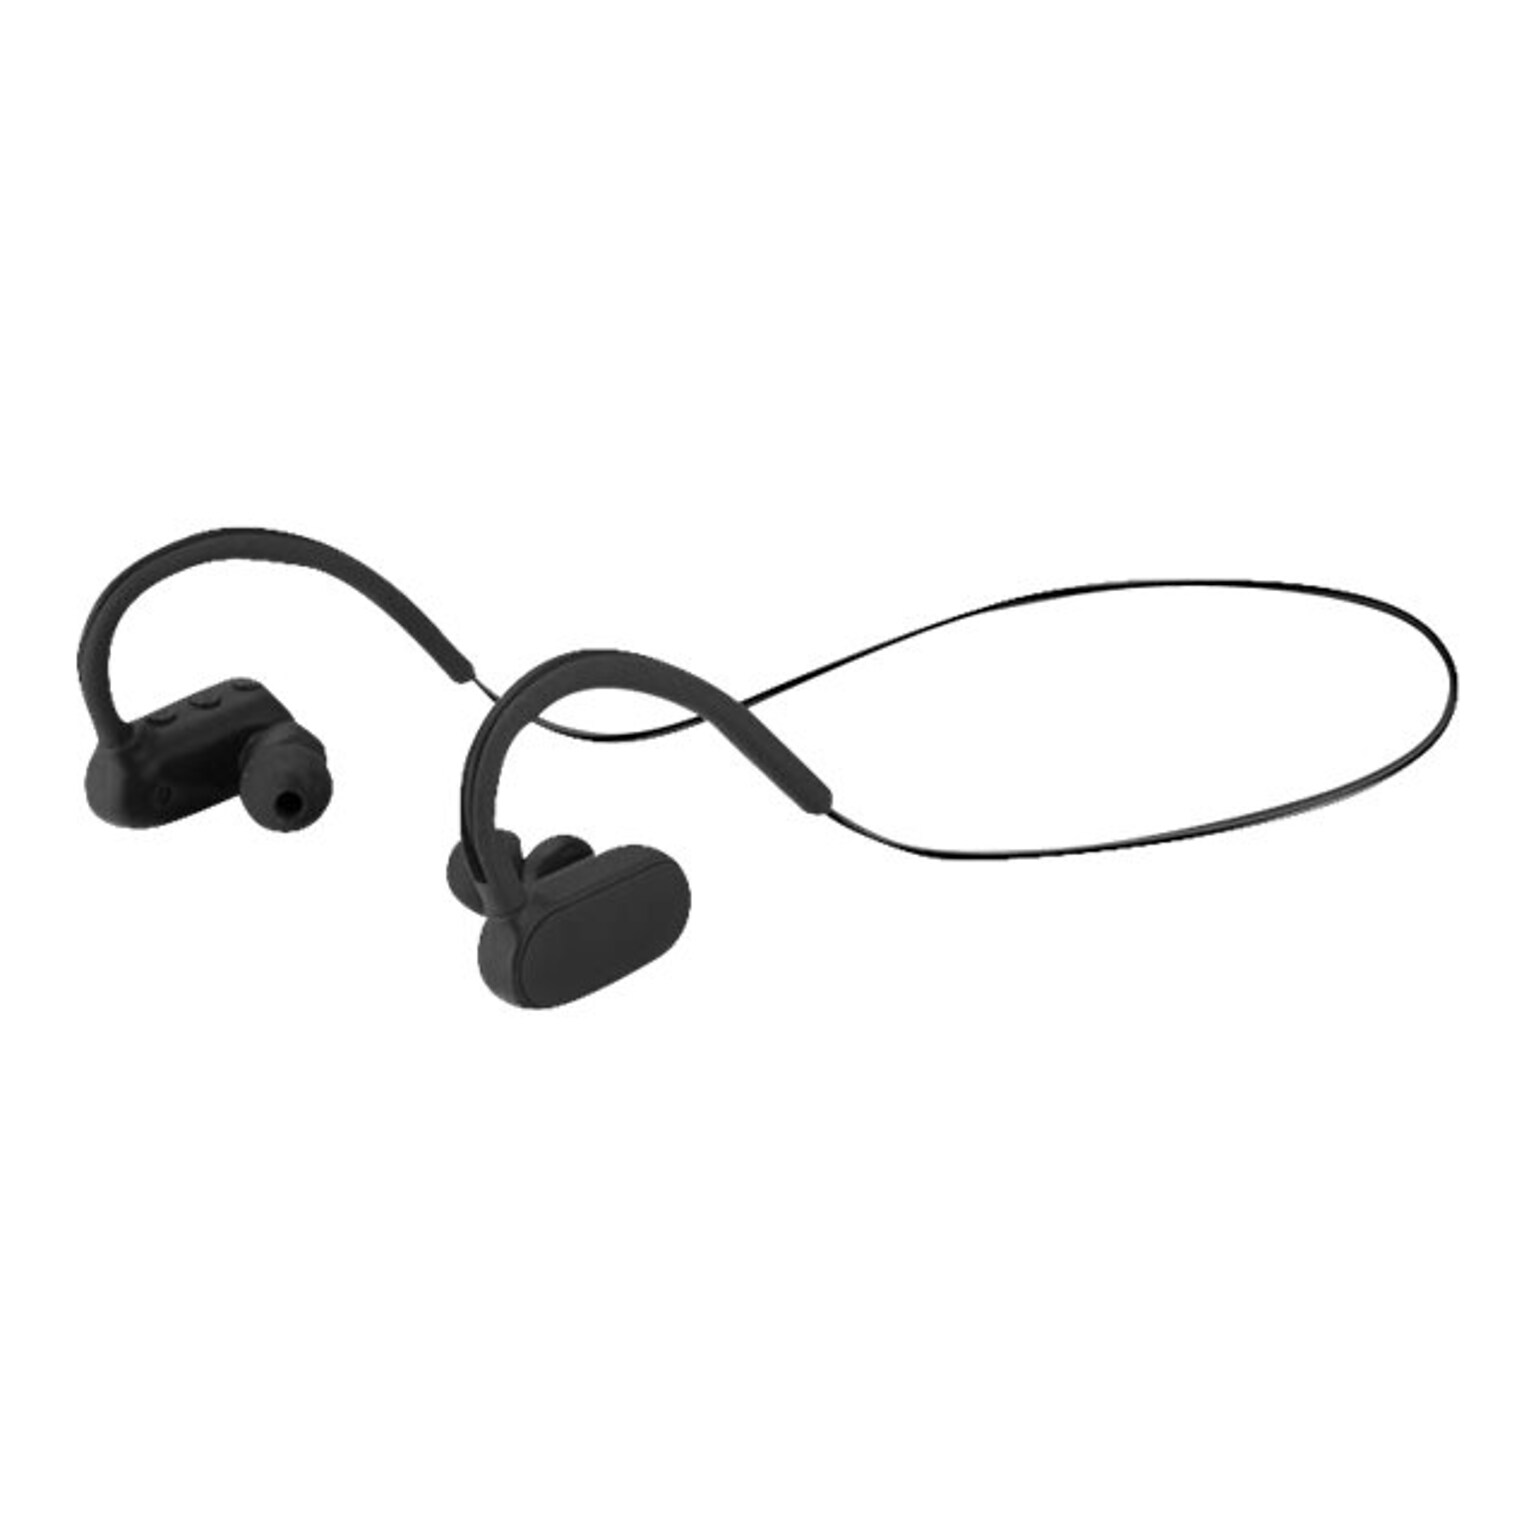 iLive Wireless Earbuds Headphones, Bluetooth, Black (IAEB29B)